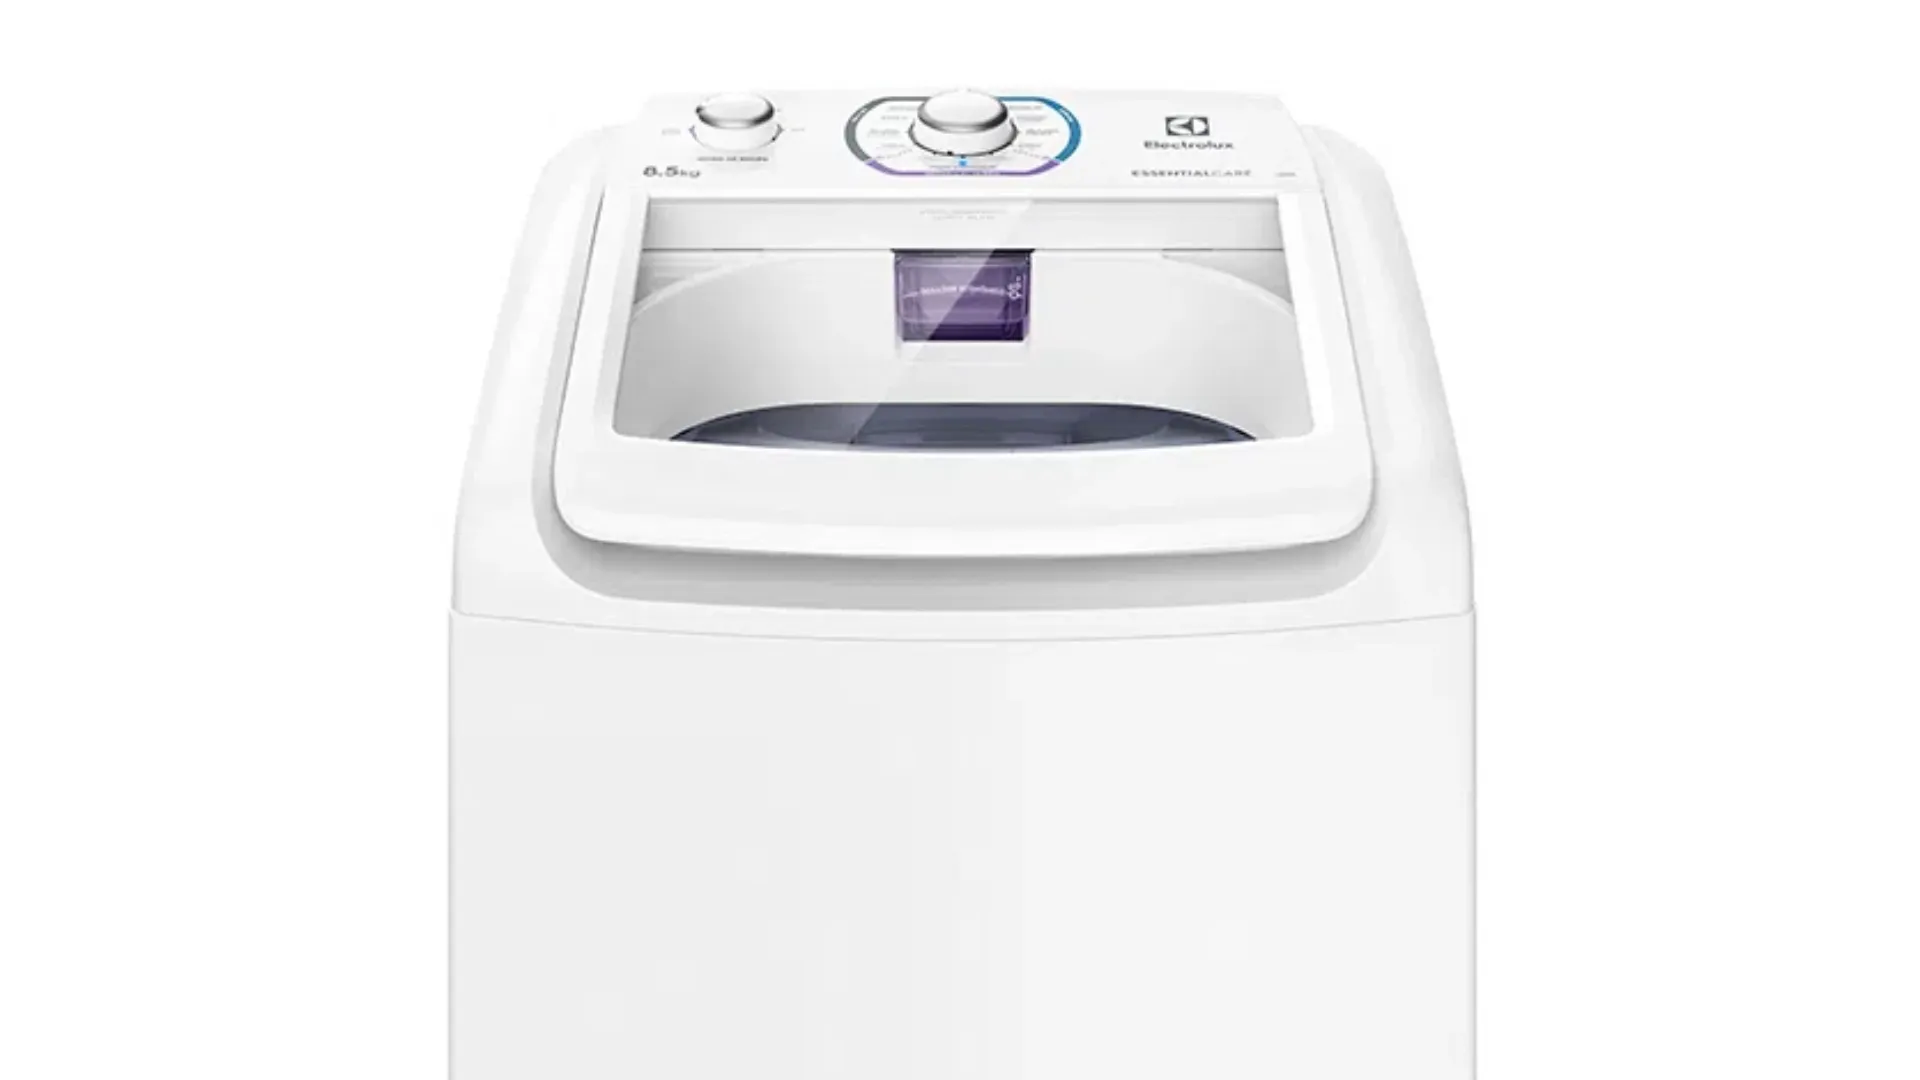 Máquina de lavar Electrolux LES09 branca, posicionada de frente